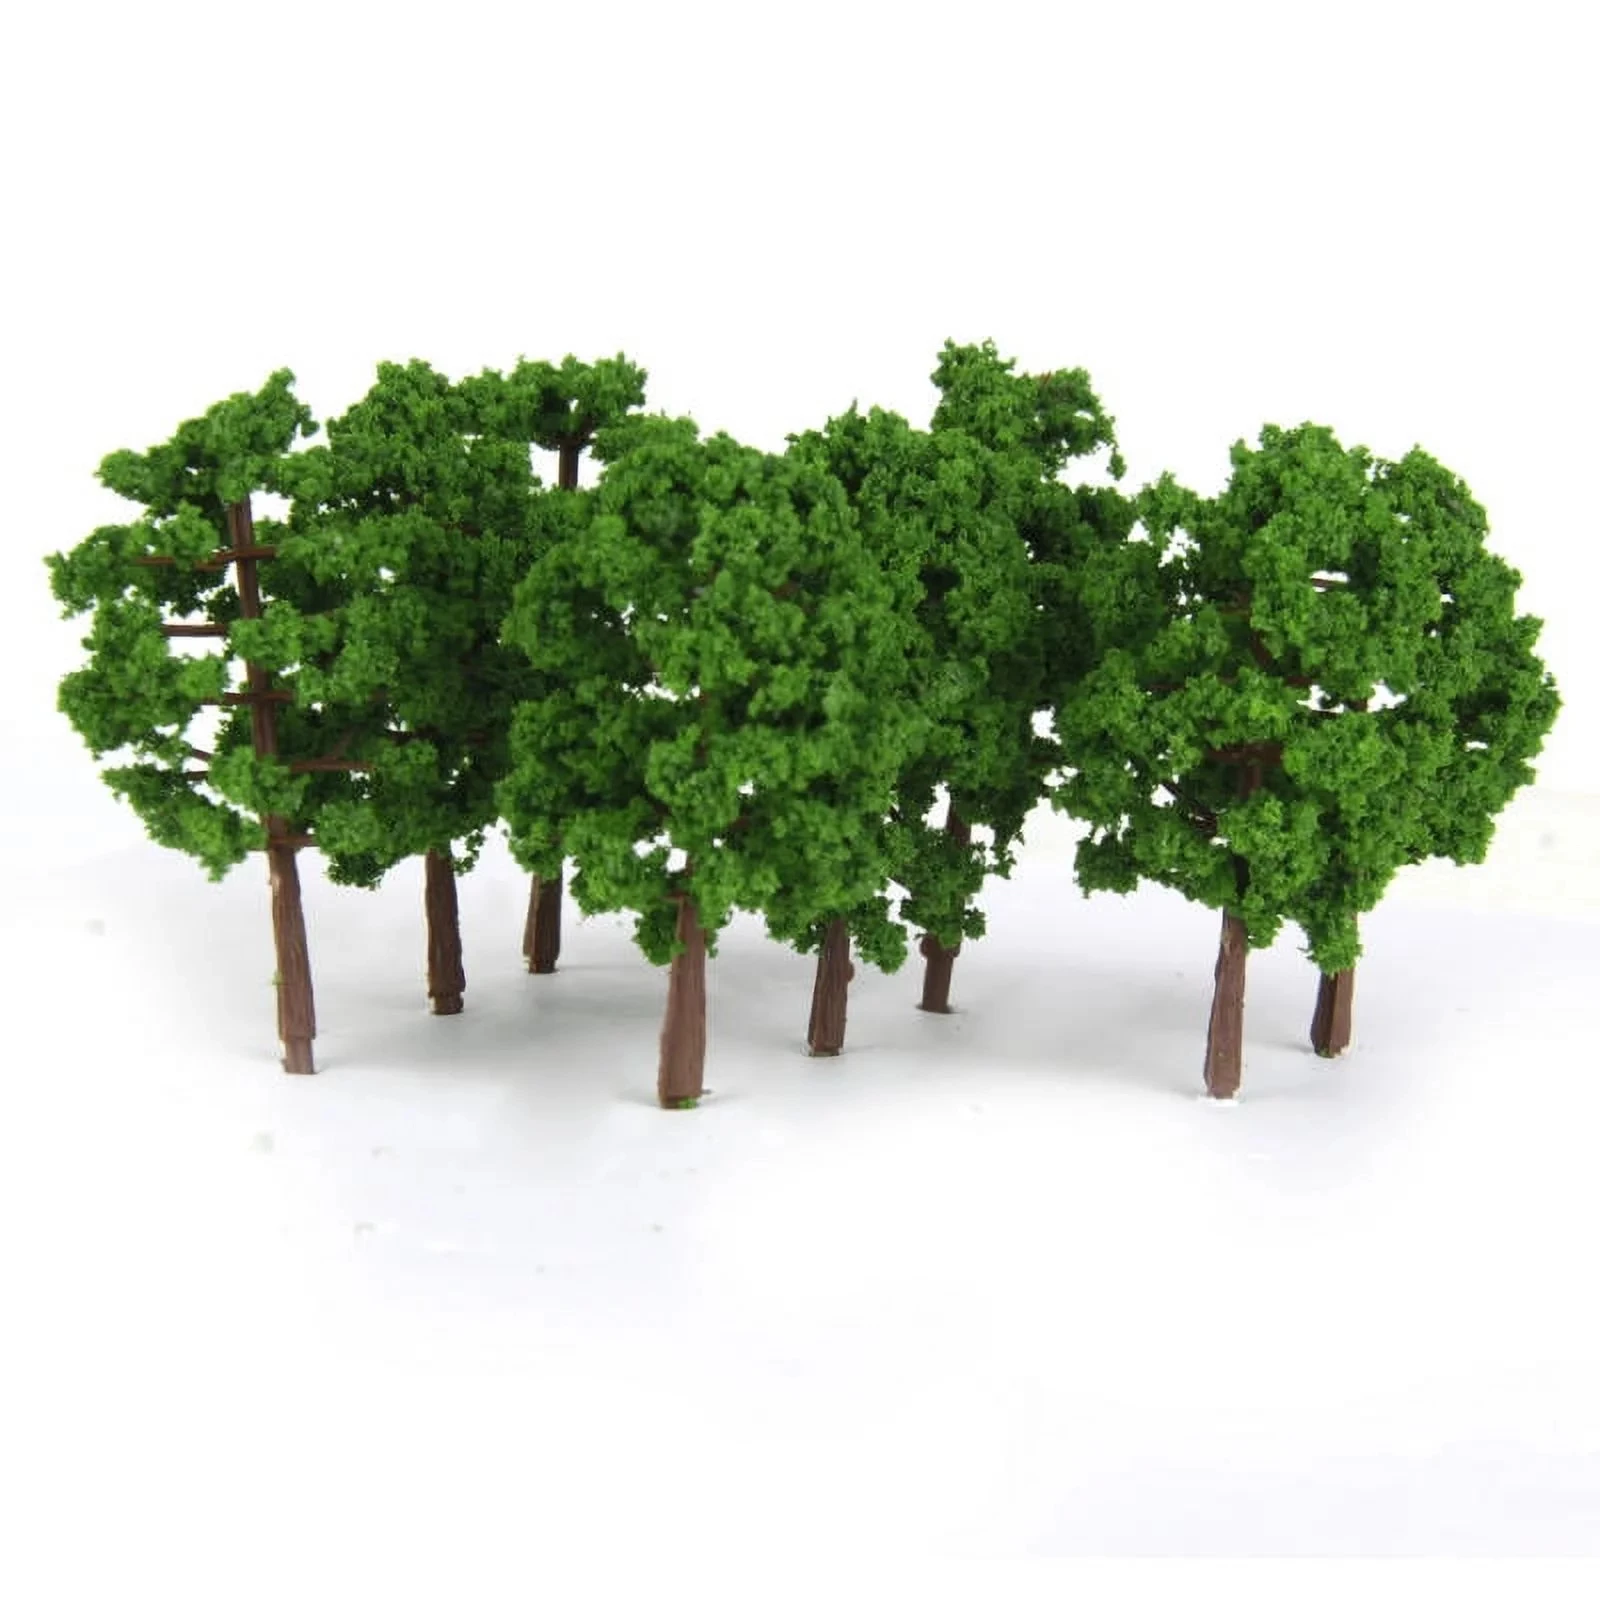 

60pcs Model Tree Building Model Tree Decorative Plastic Tree Simulate Artificial Tree For Train Railway Scene Layout Decor Model